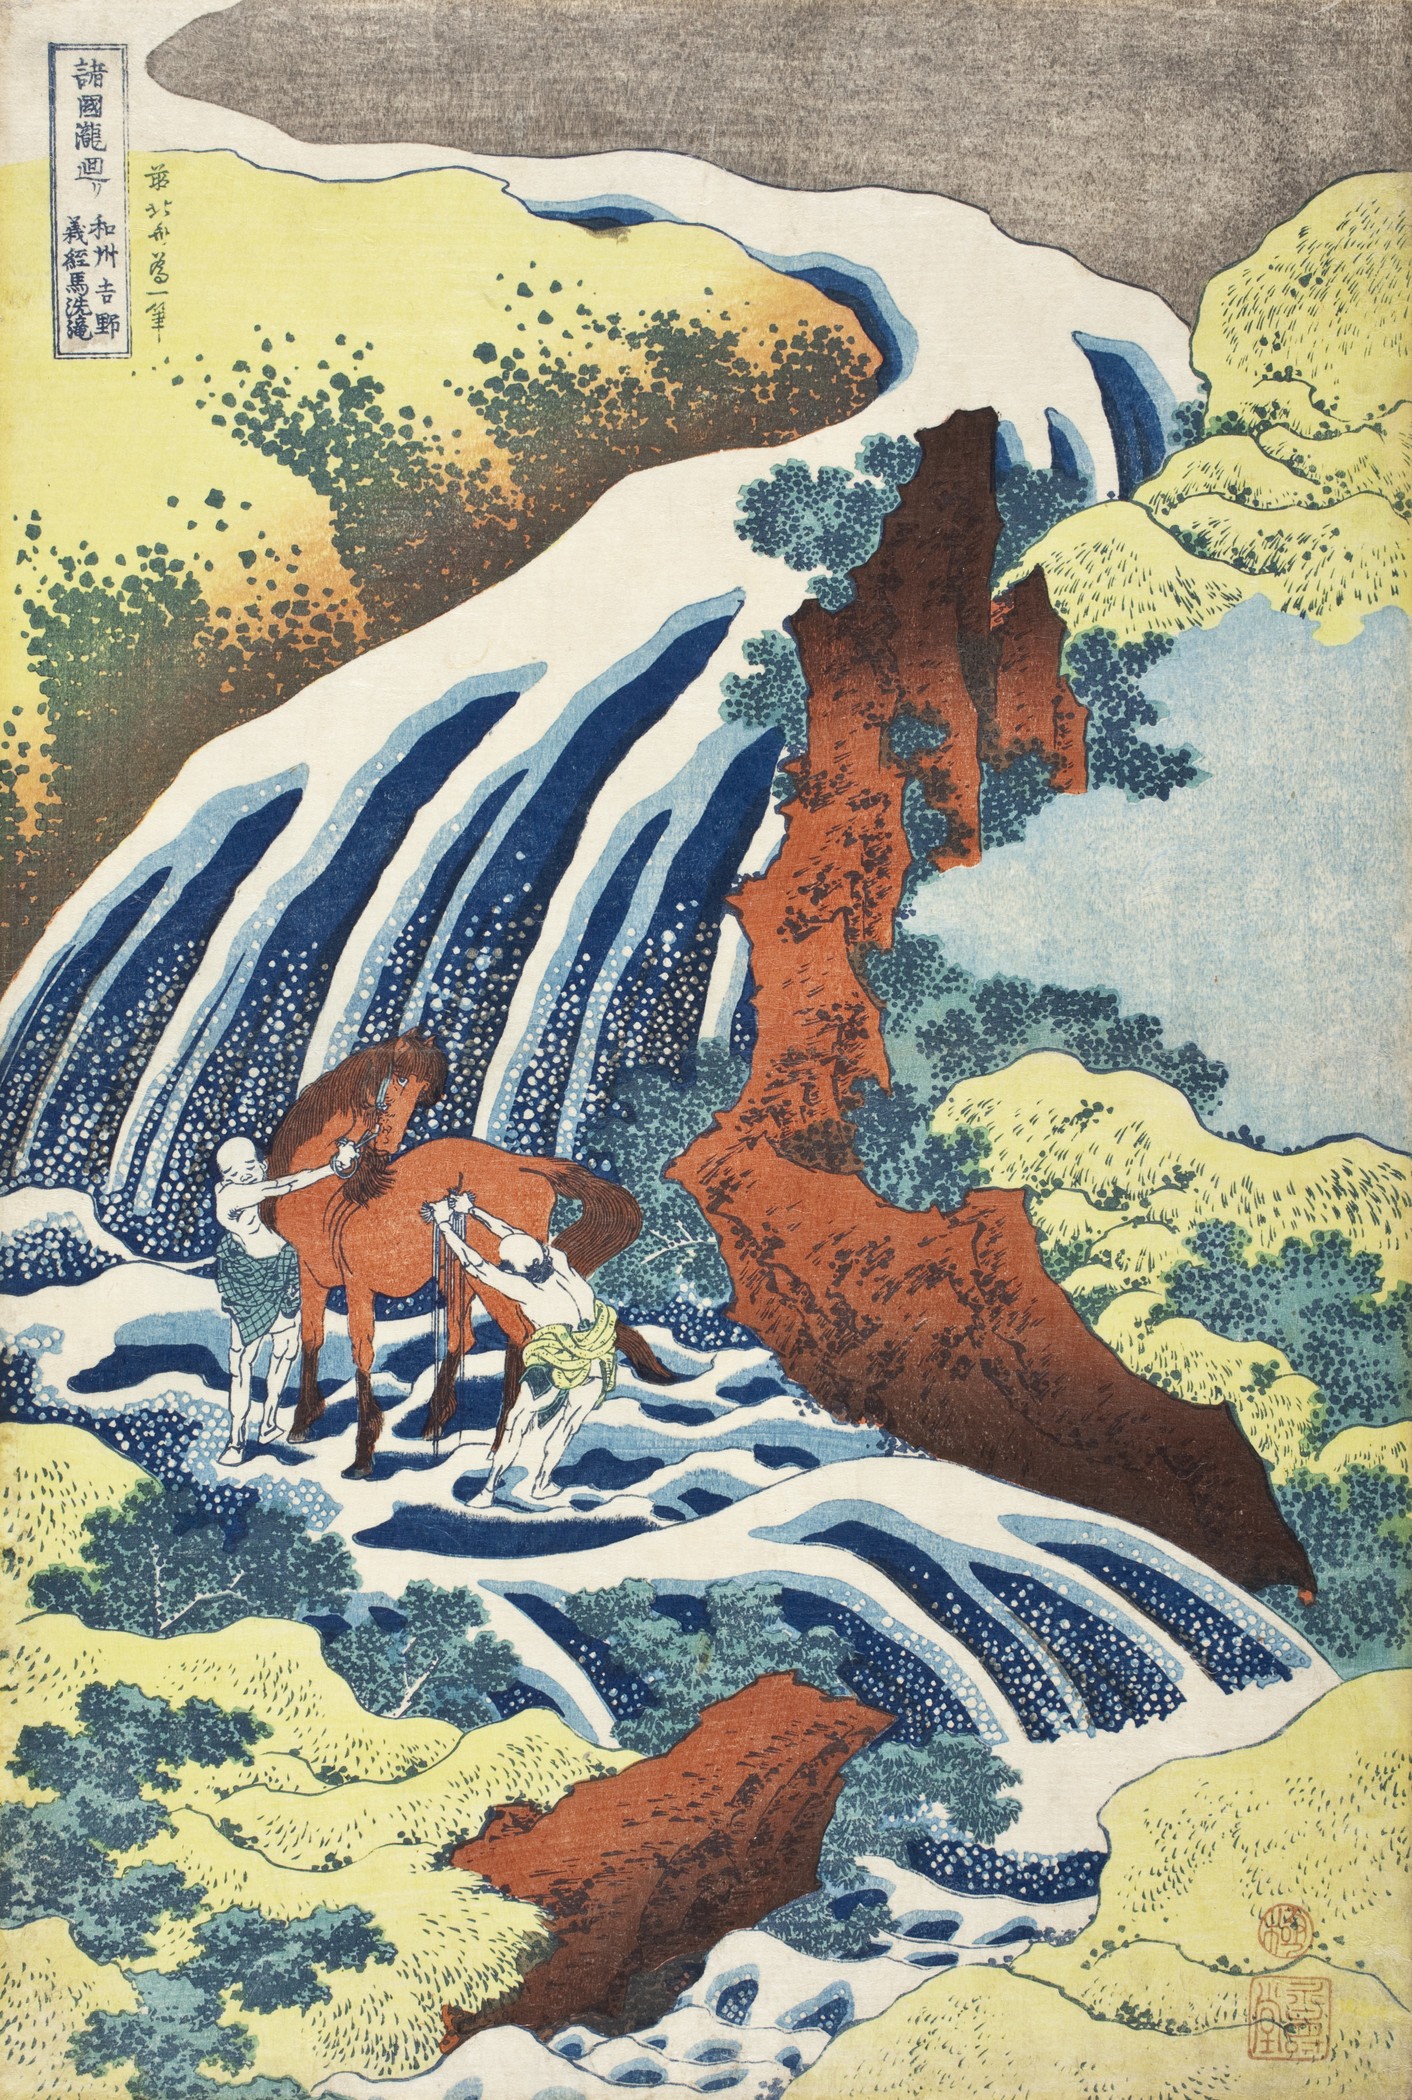 Japanese Prints: Hokusai at LACMA